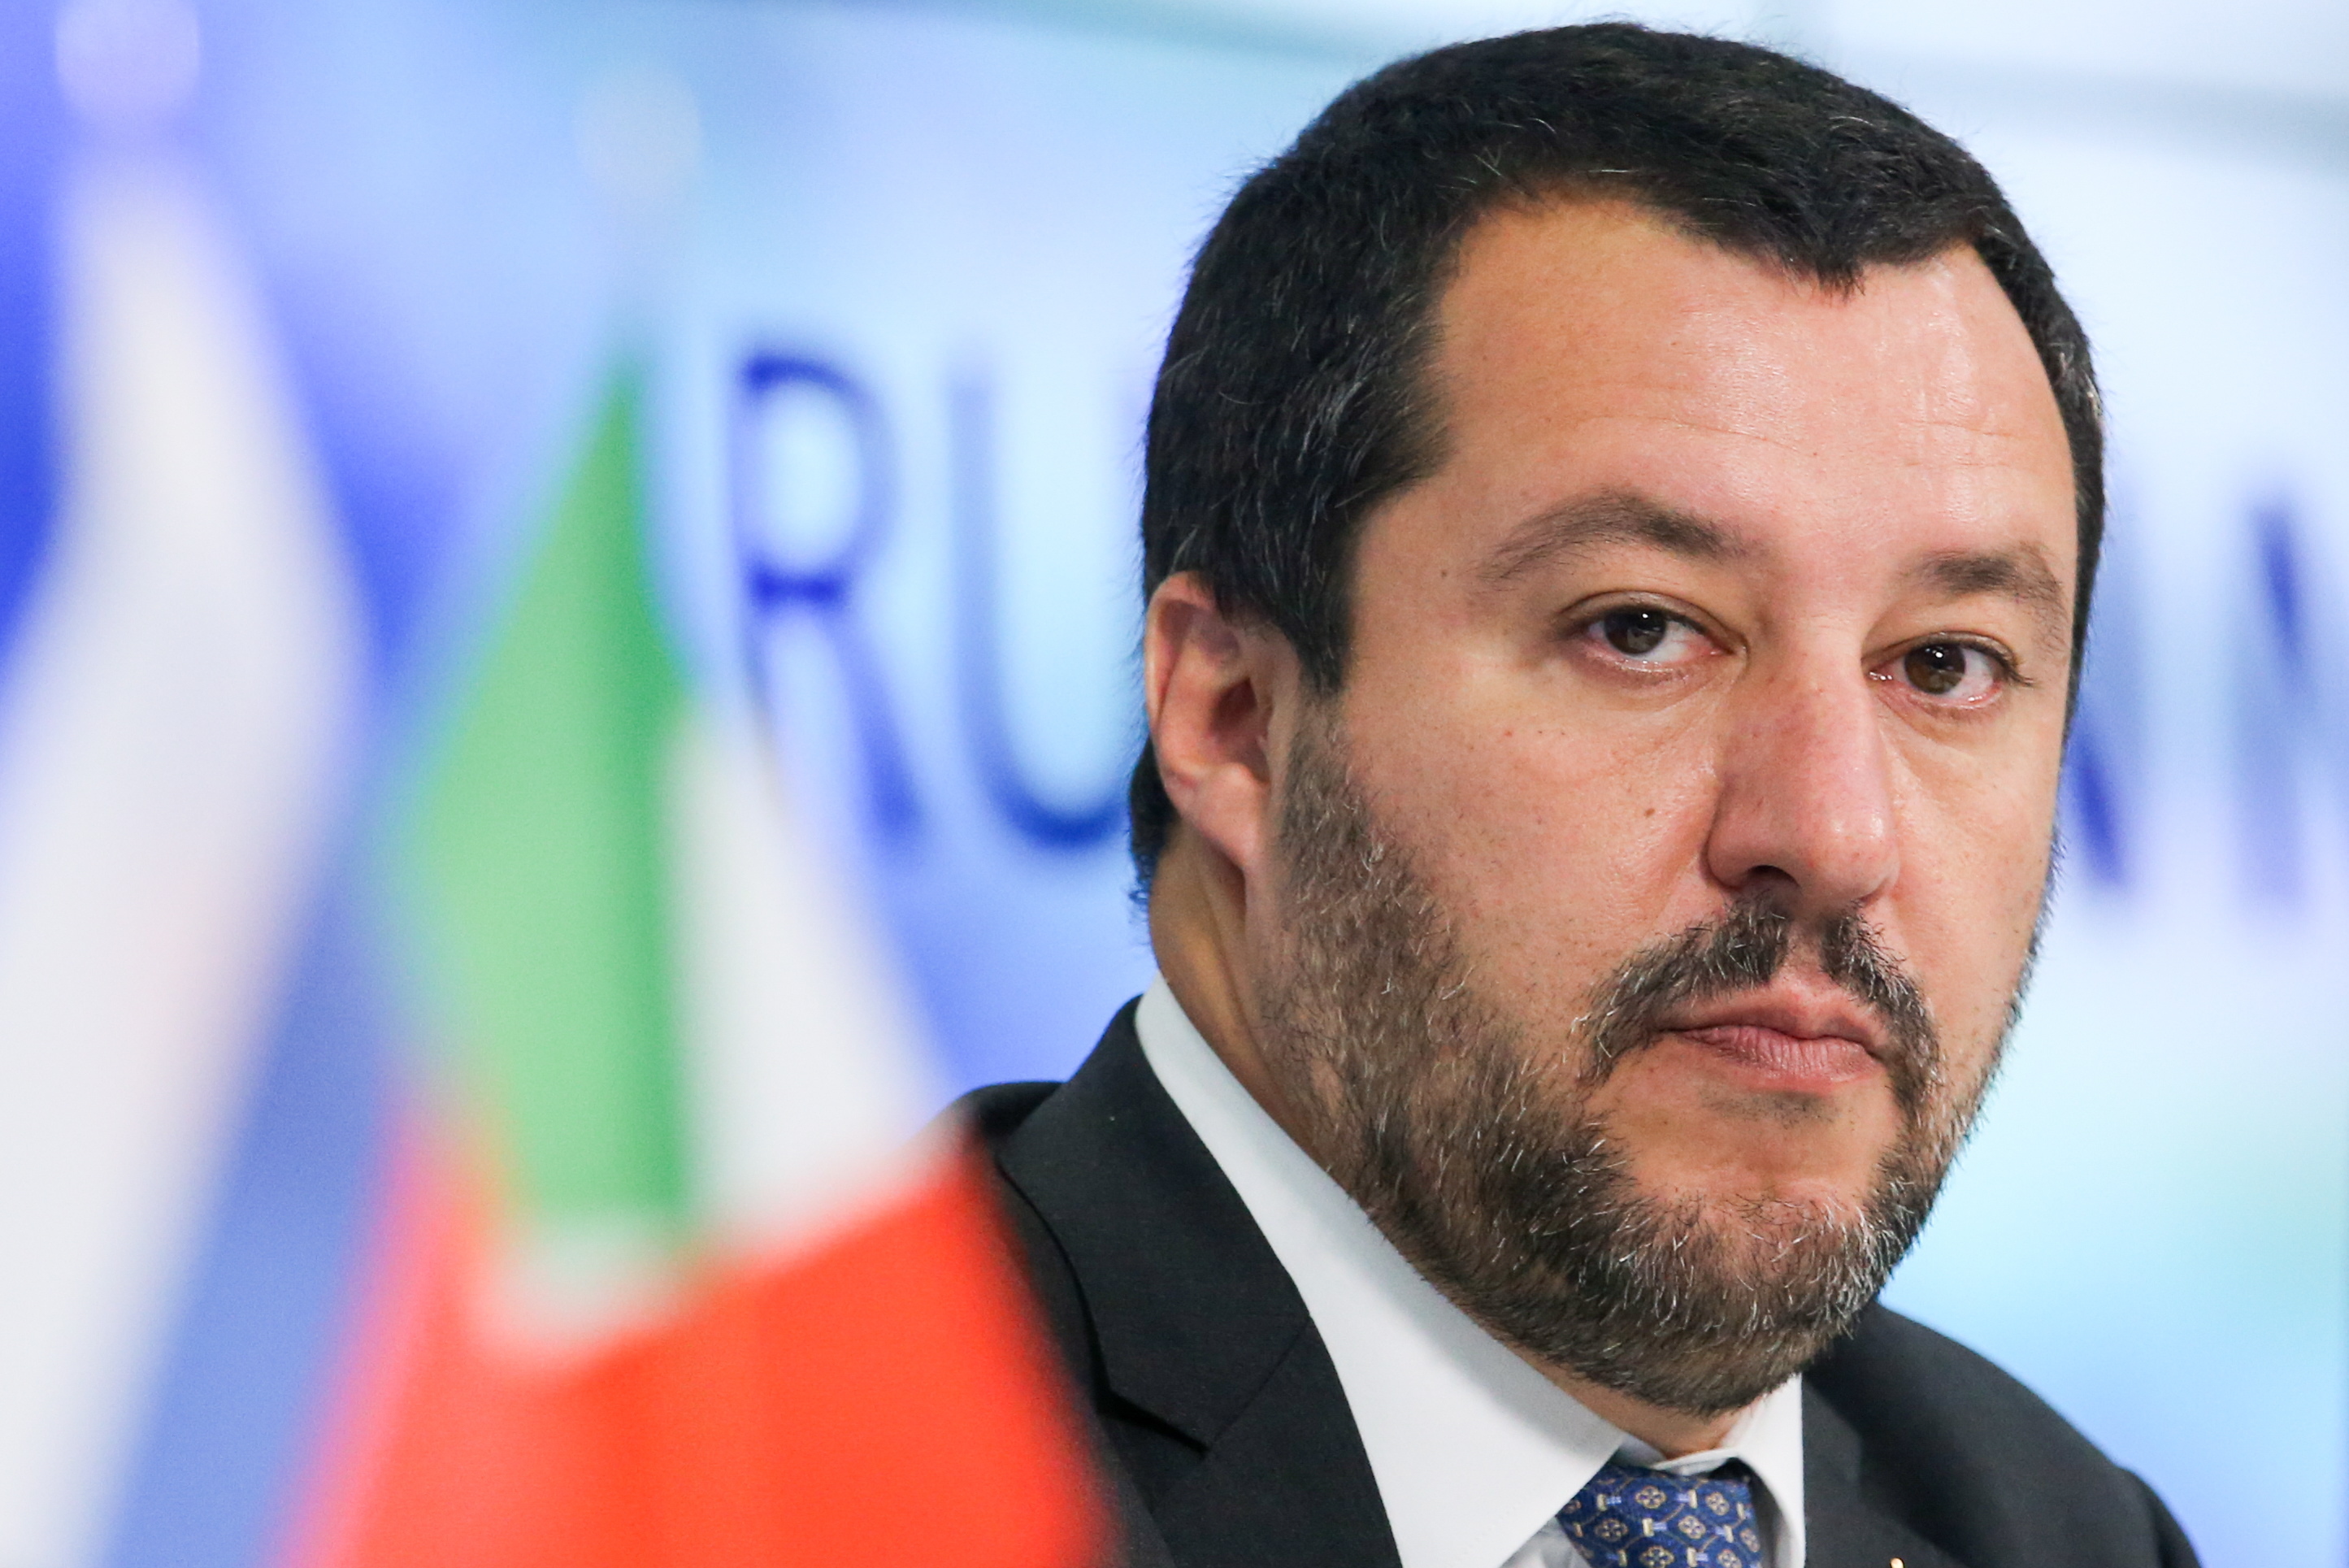 Catholic magazine compares Salvini to the devil